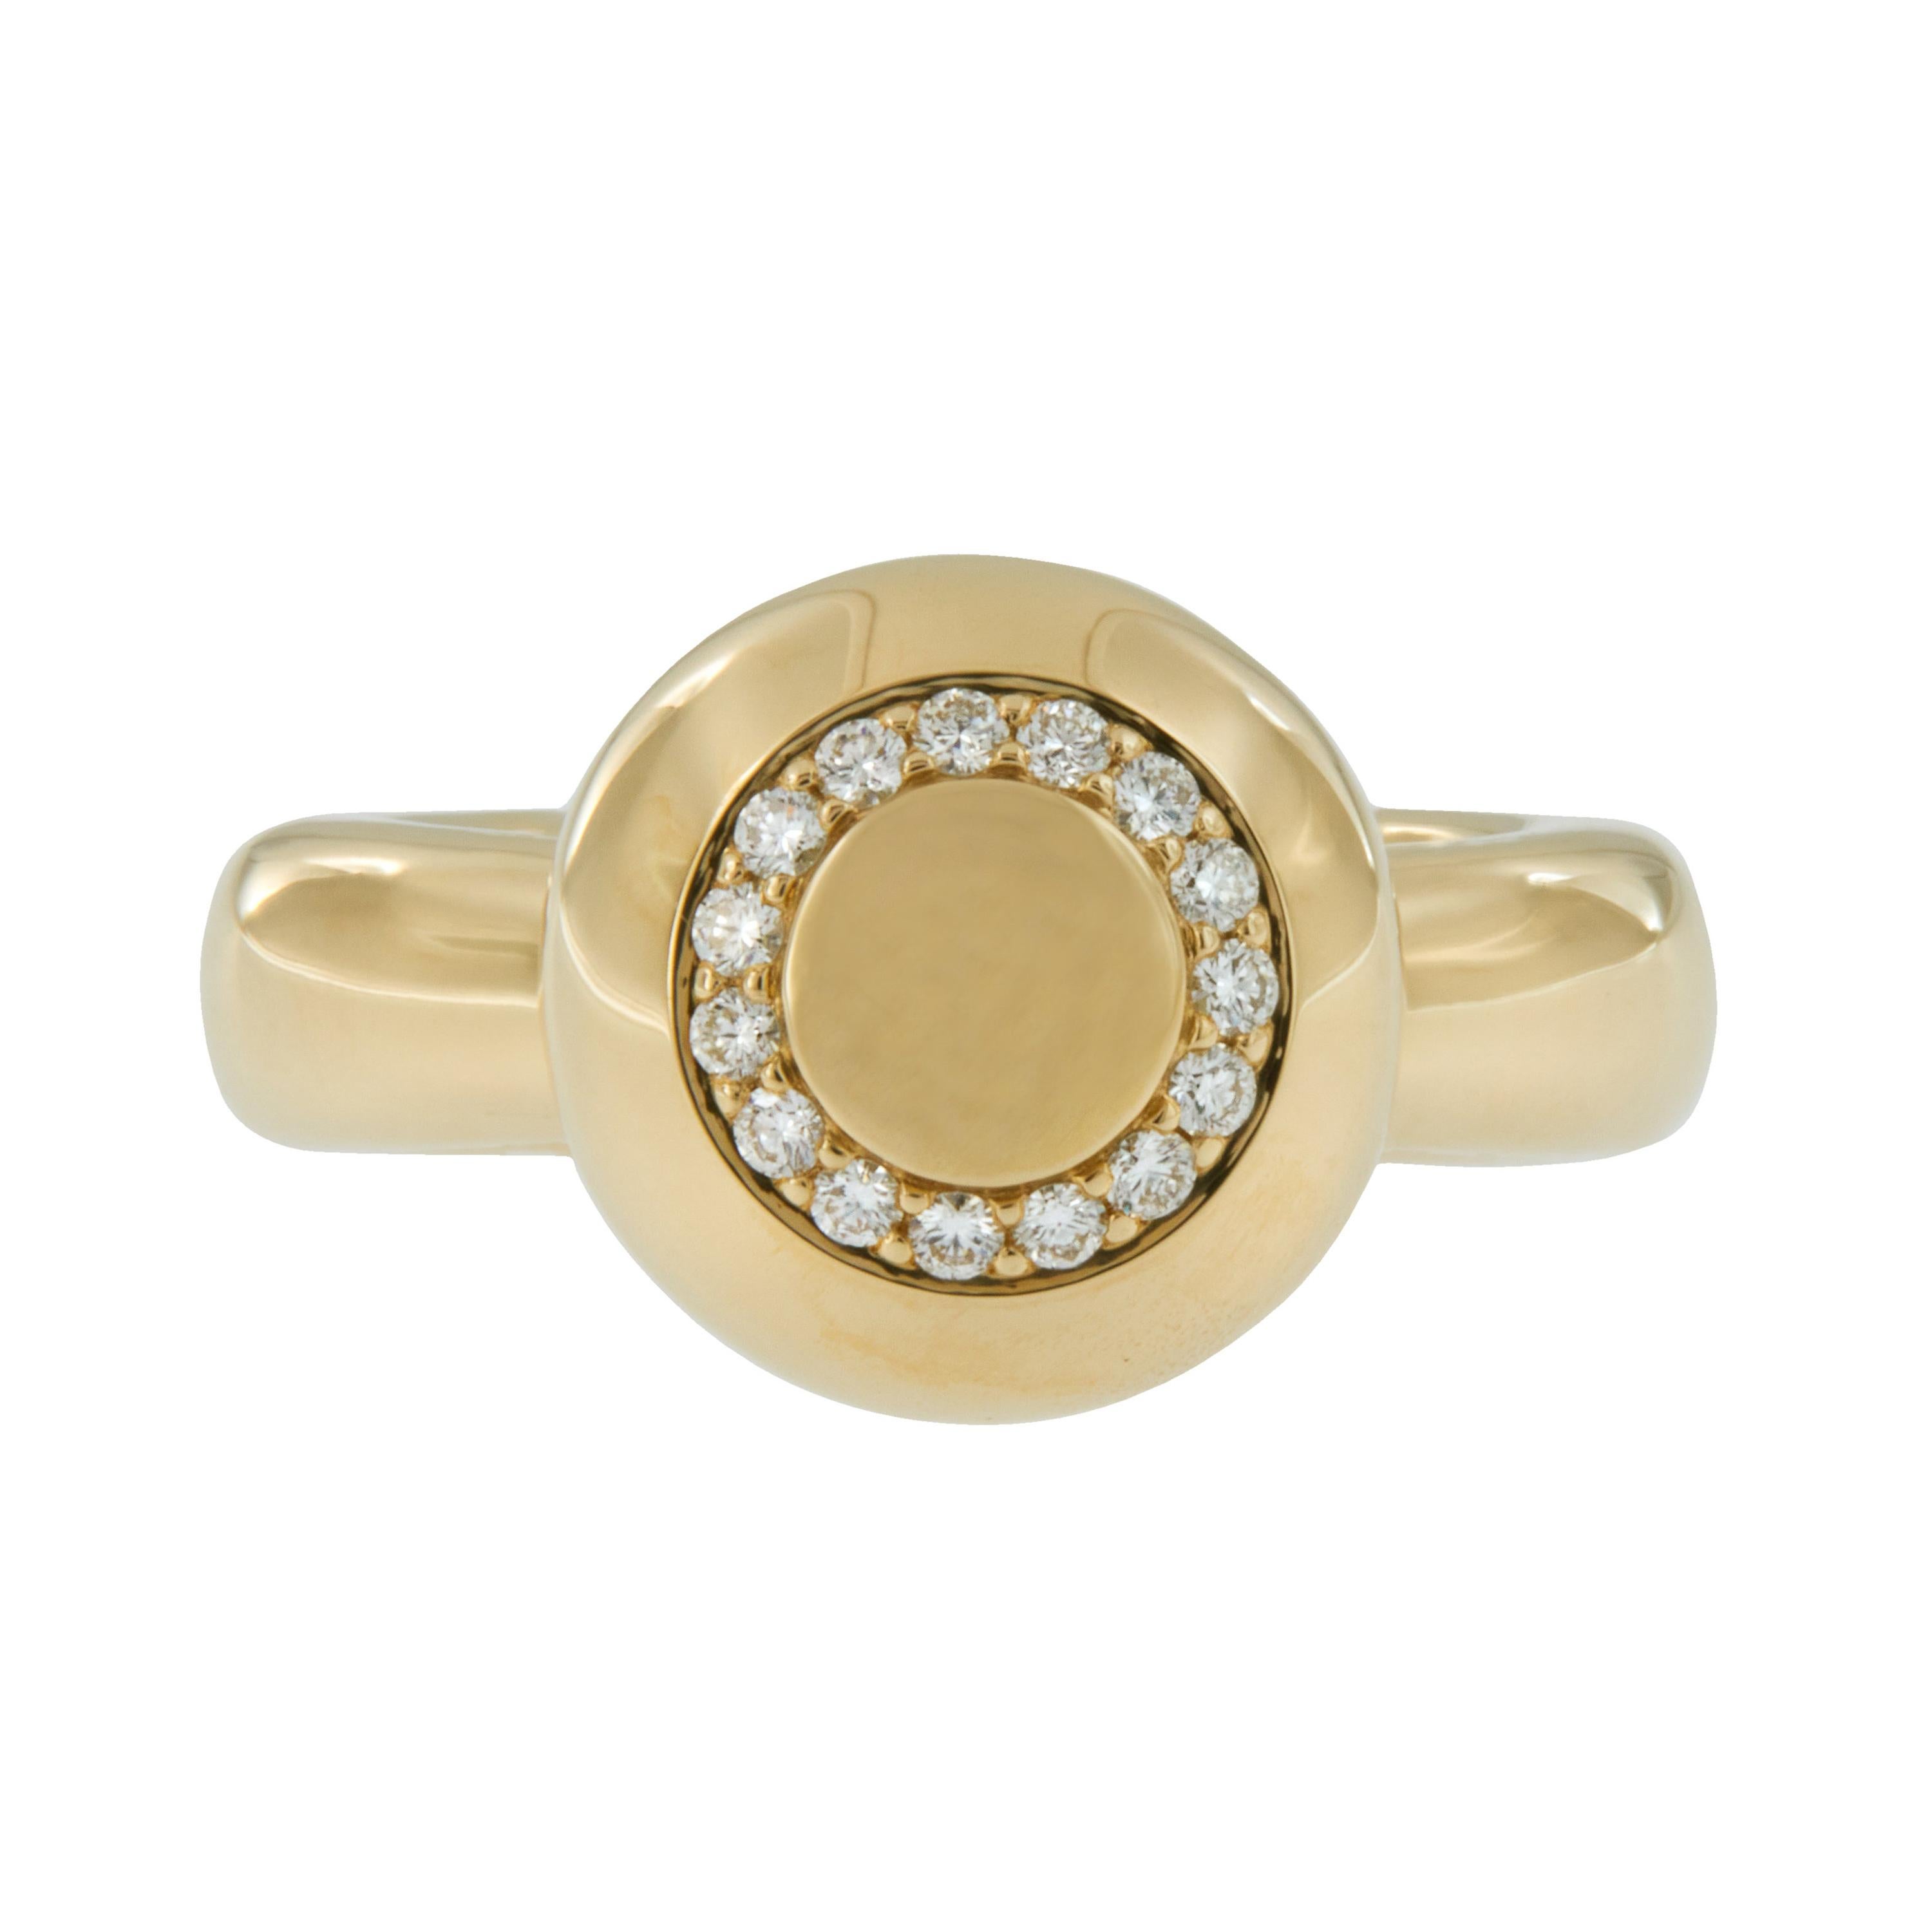 Scheffel, Schmuck Bubbles Collection 18 Karat Gold and Diamond Ring